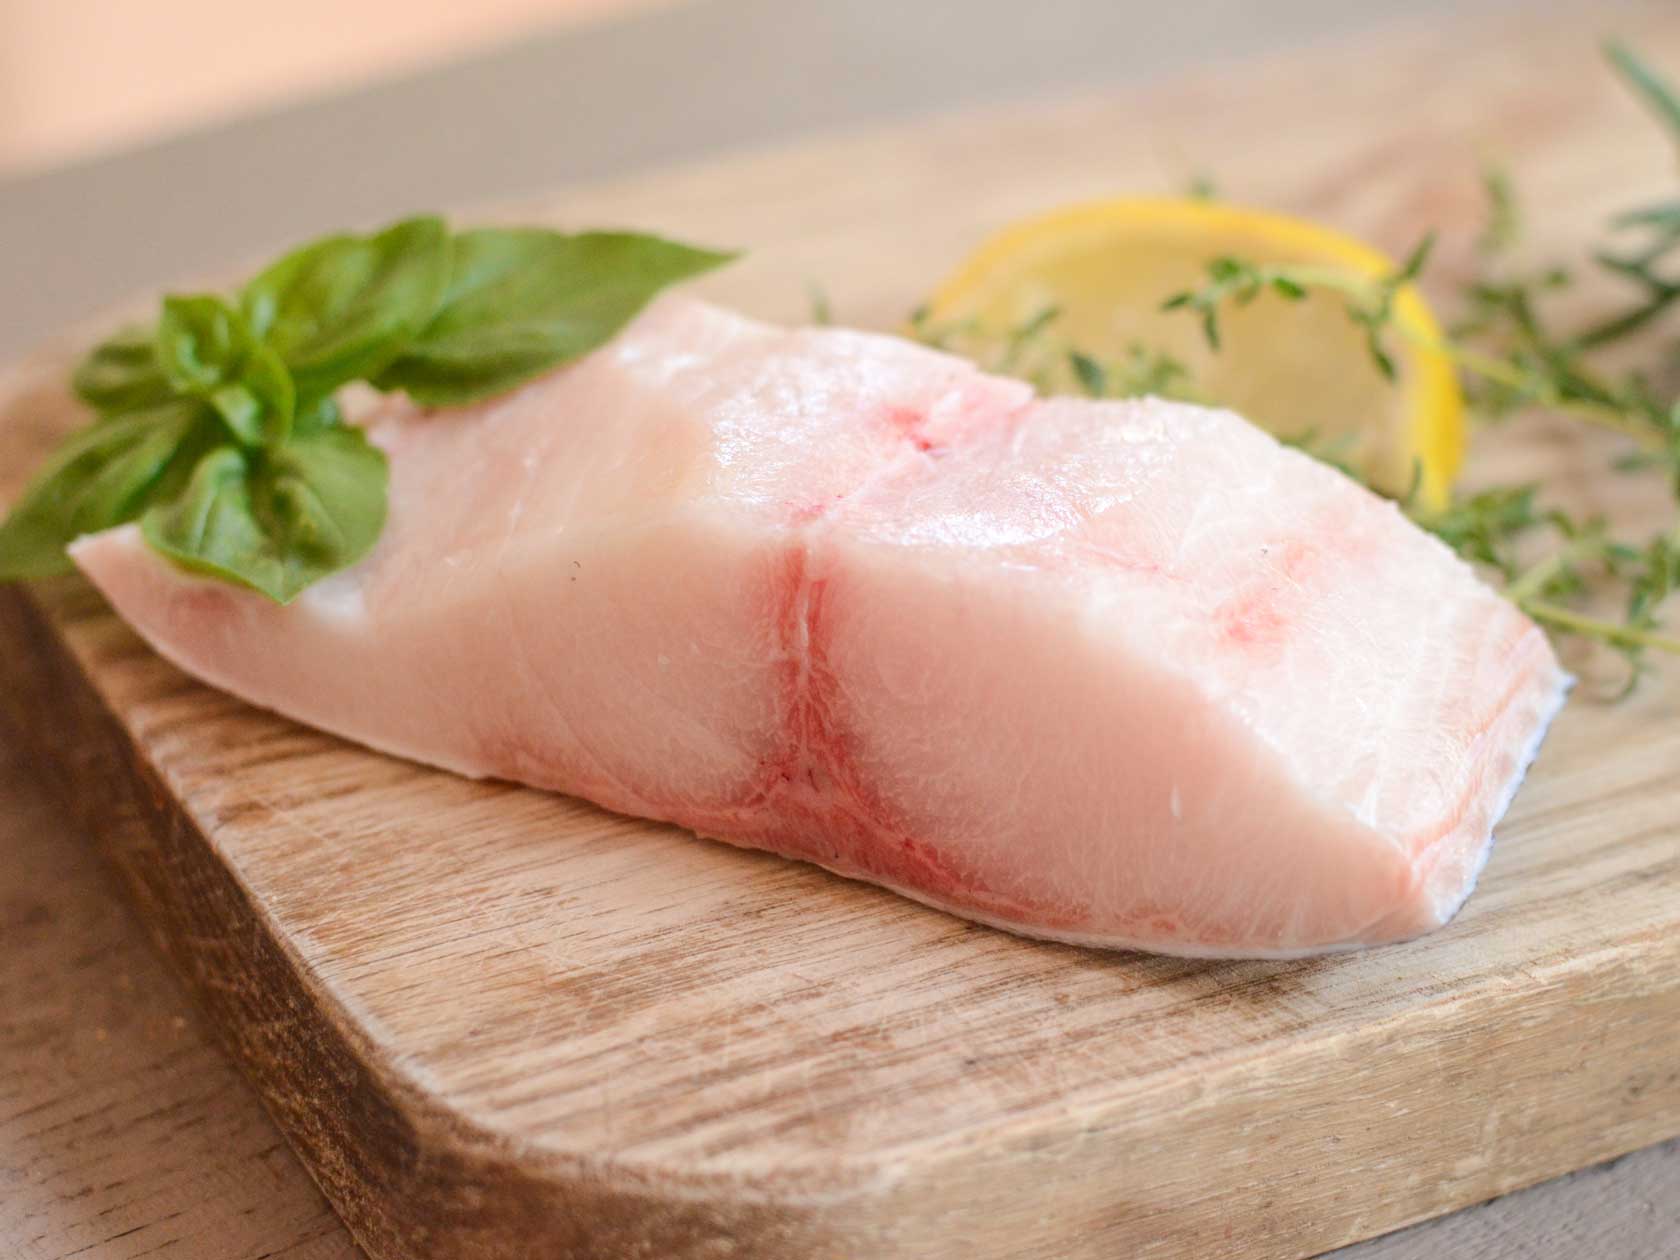 Daging Ikan Cobia asli Indonesia berupa Sashimi yang bergizi tinggi dan berdaging putih